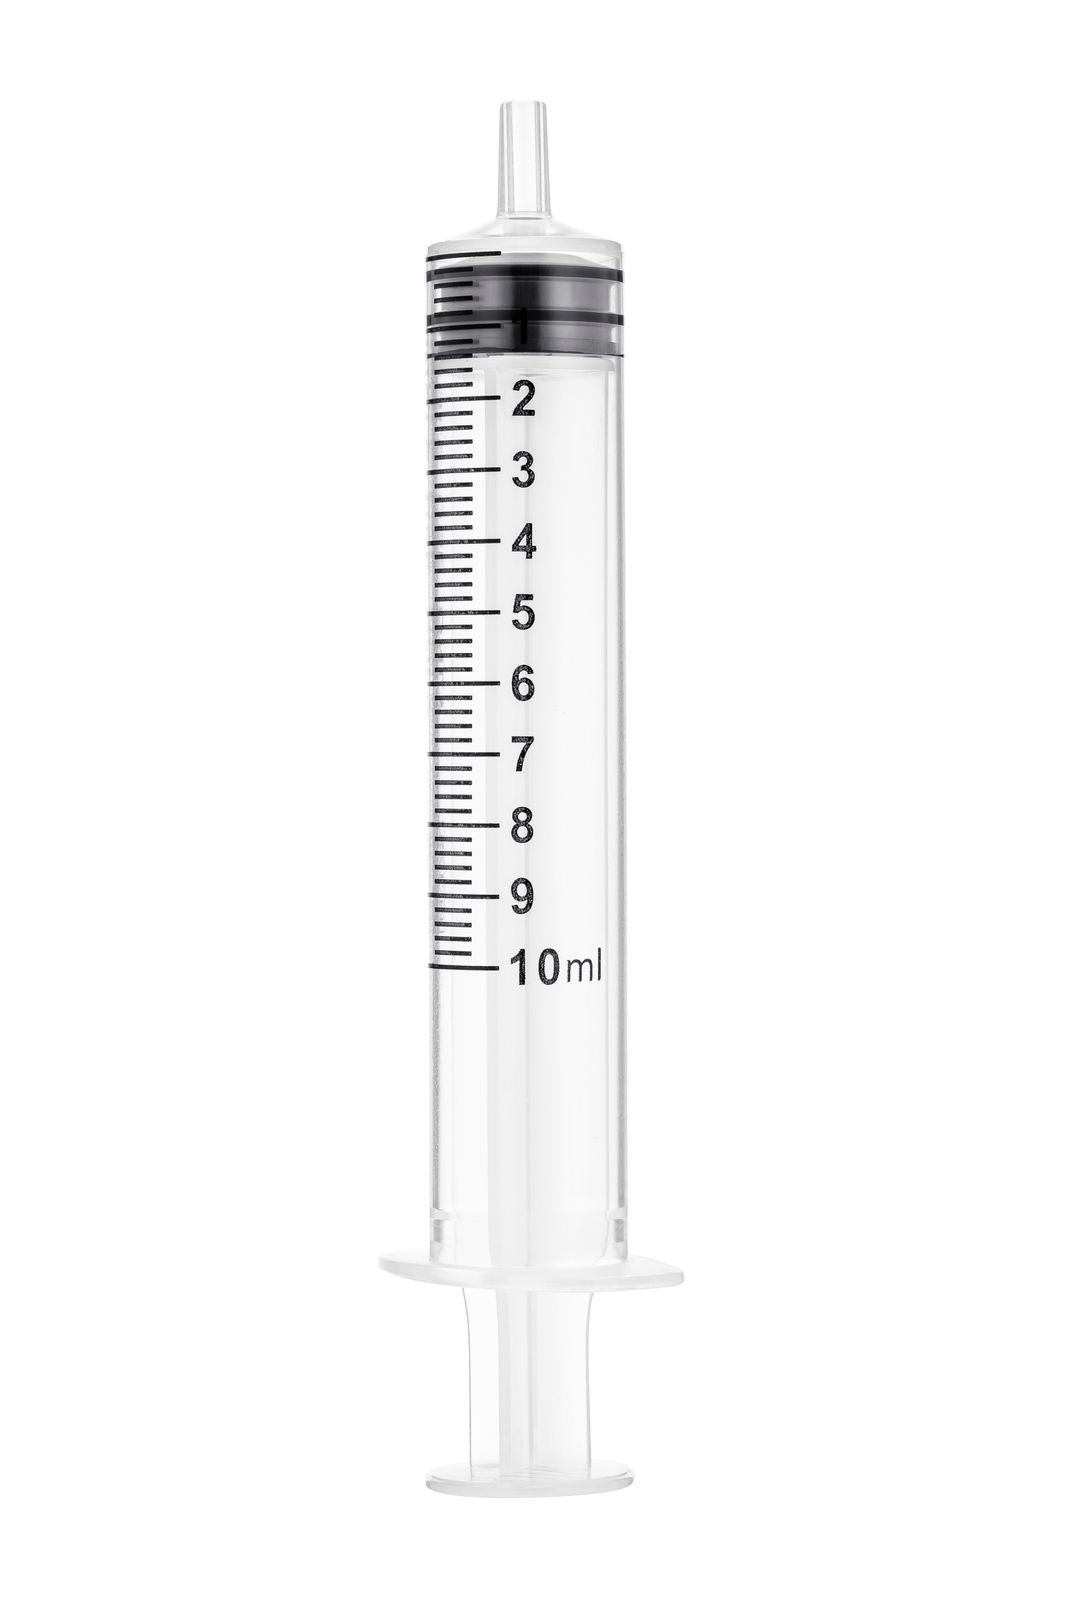 Case/300 - SOL-M 30ml Luer Lock Syringe w/o Needle (bulk, non-sterile)